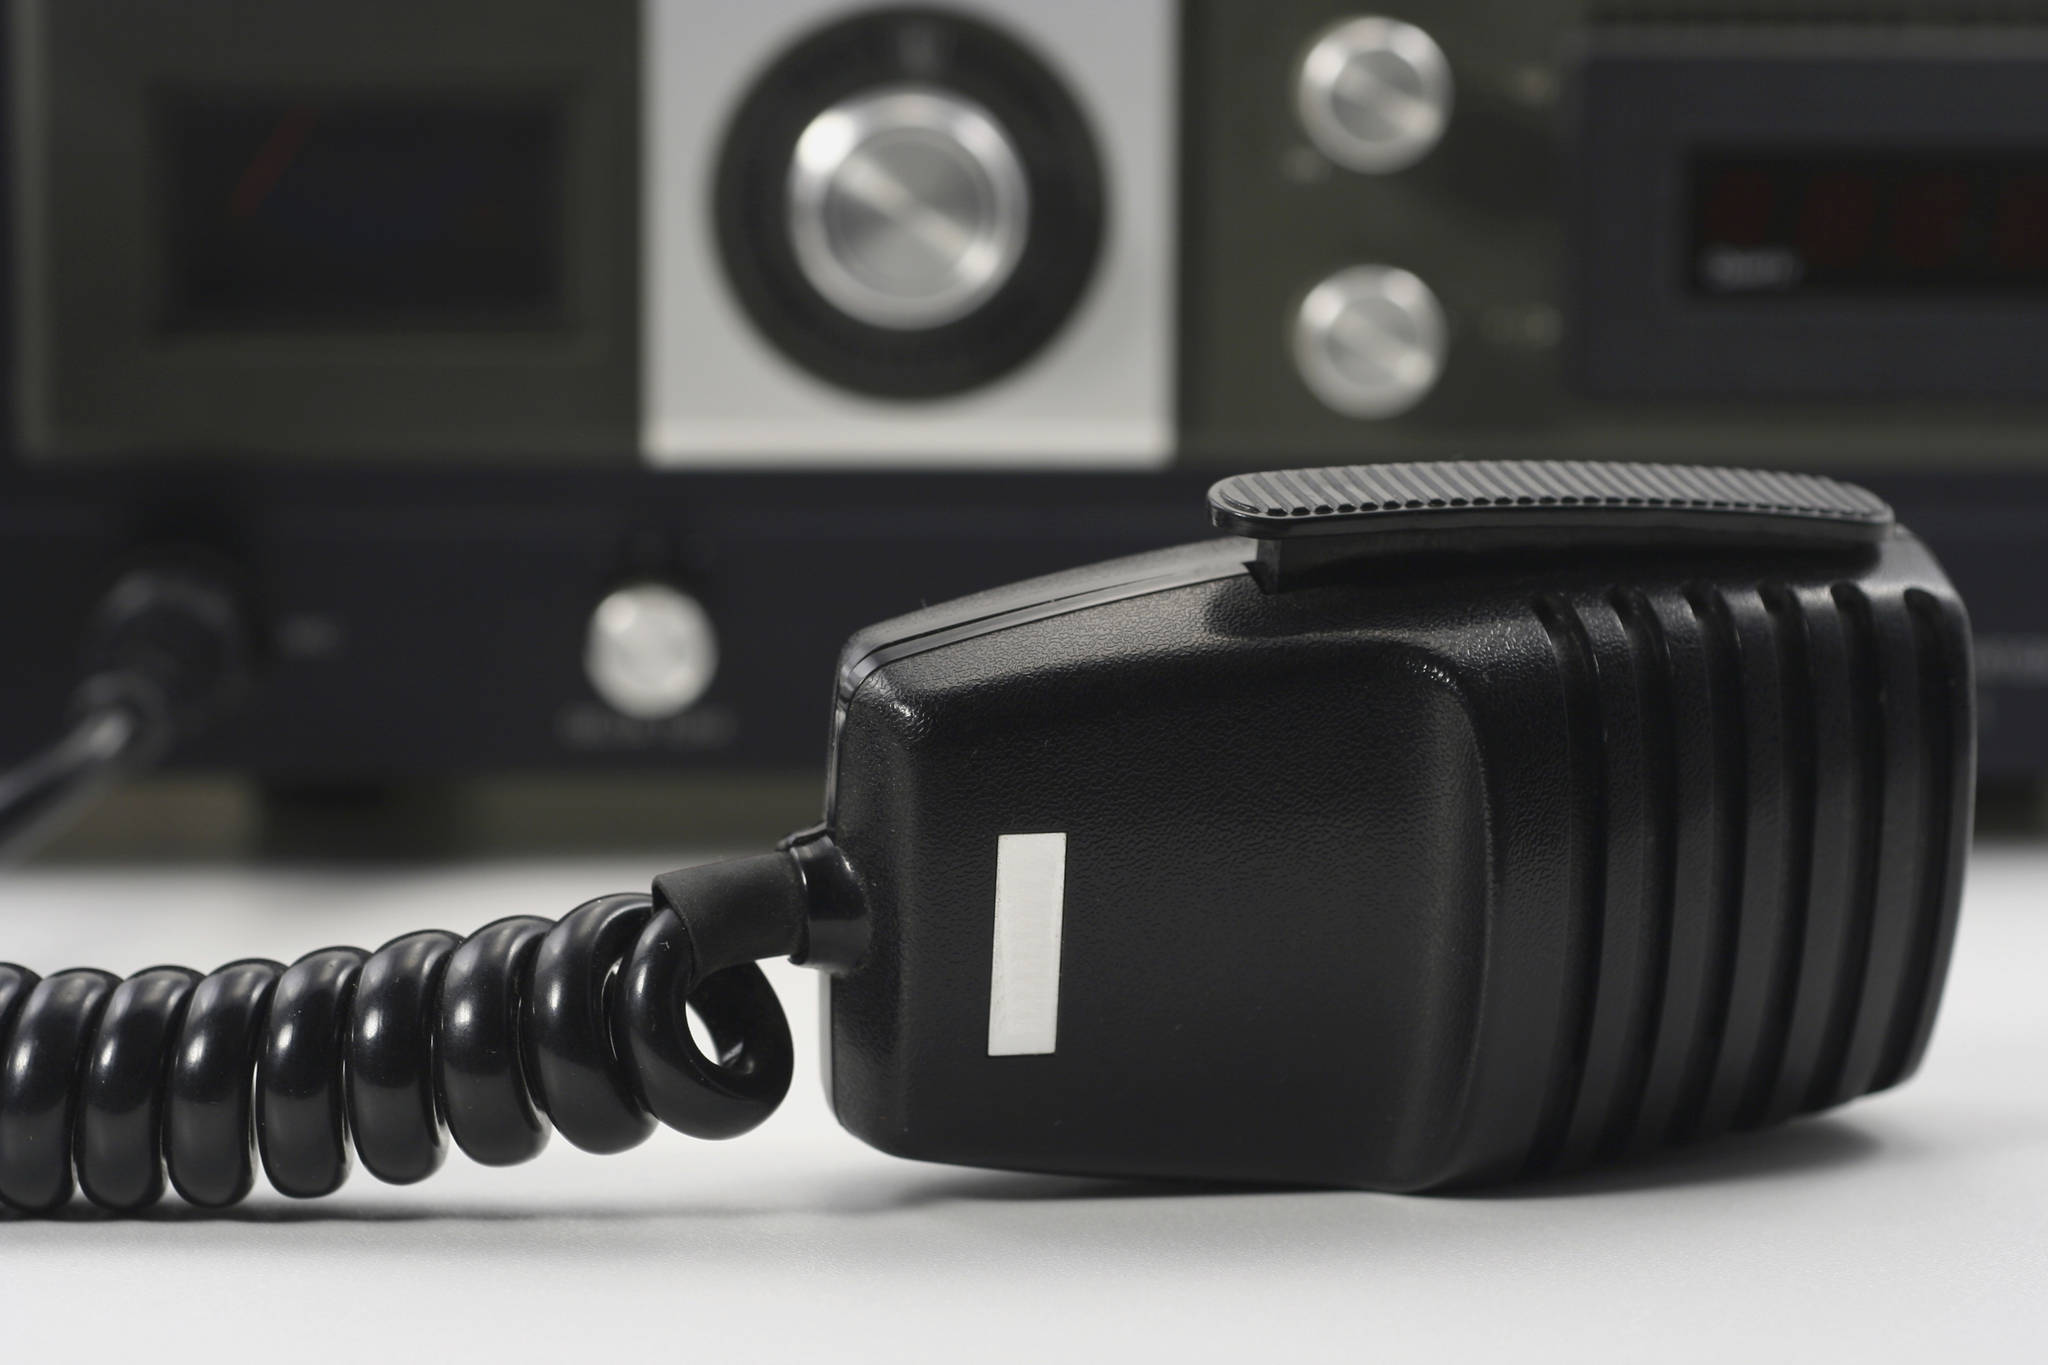 County agencies stress urgency in upgrading radio system